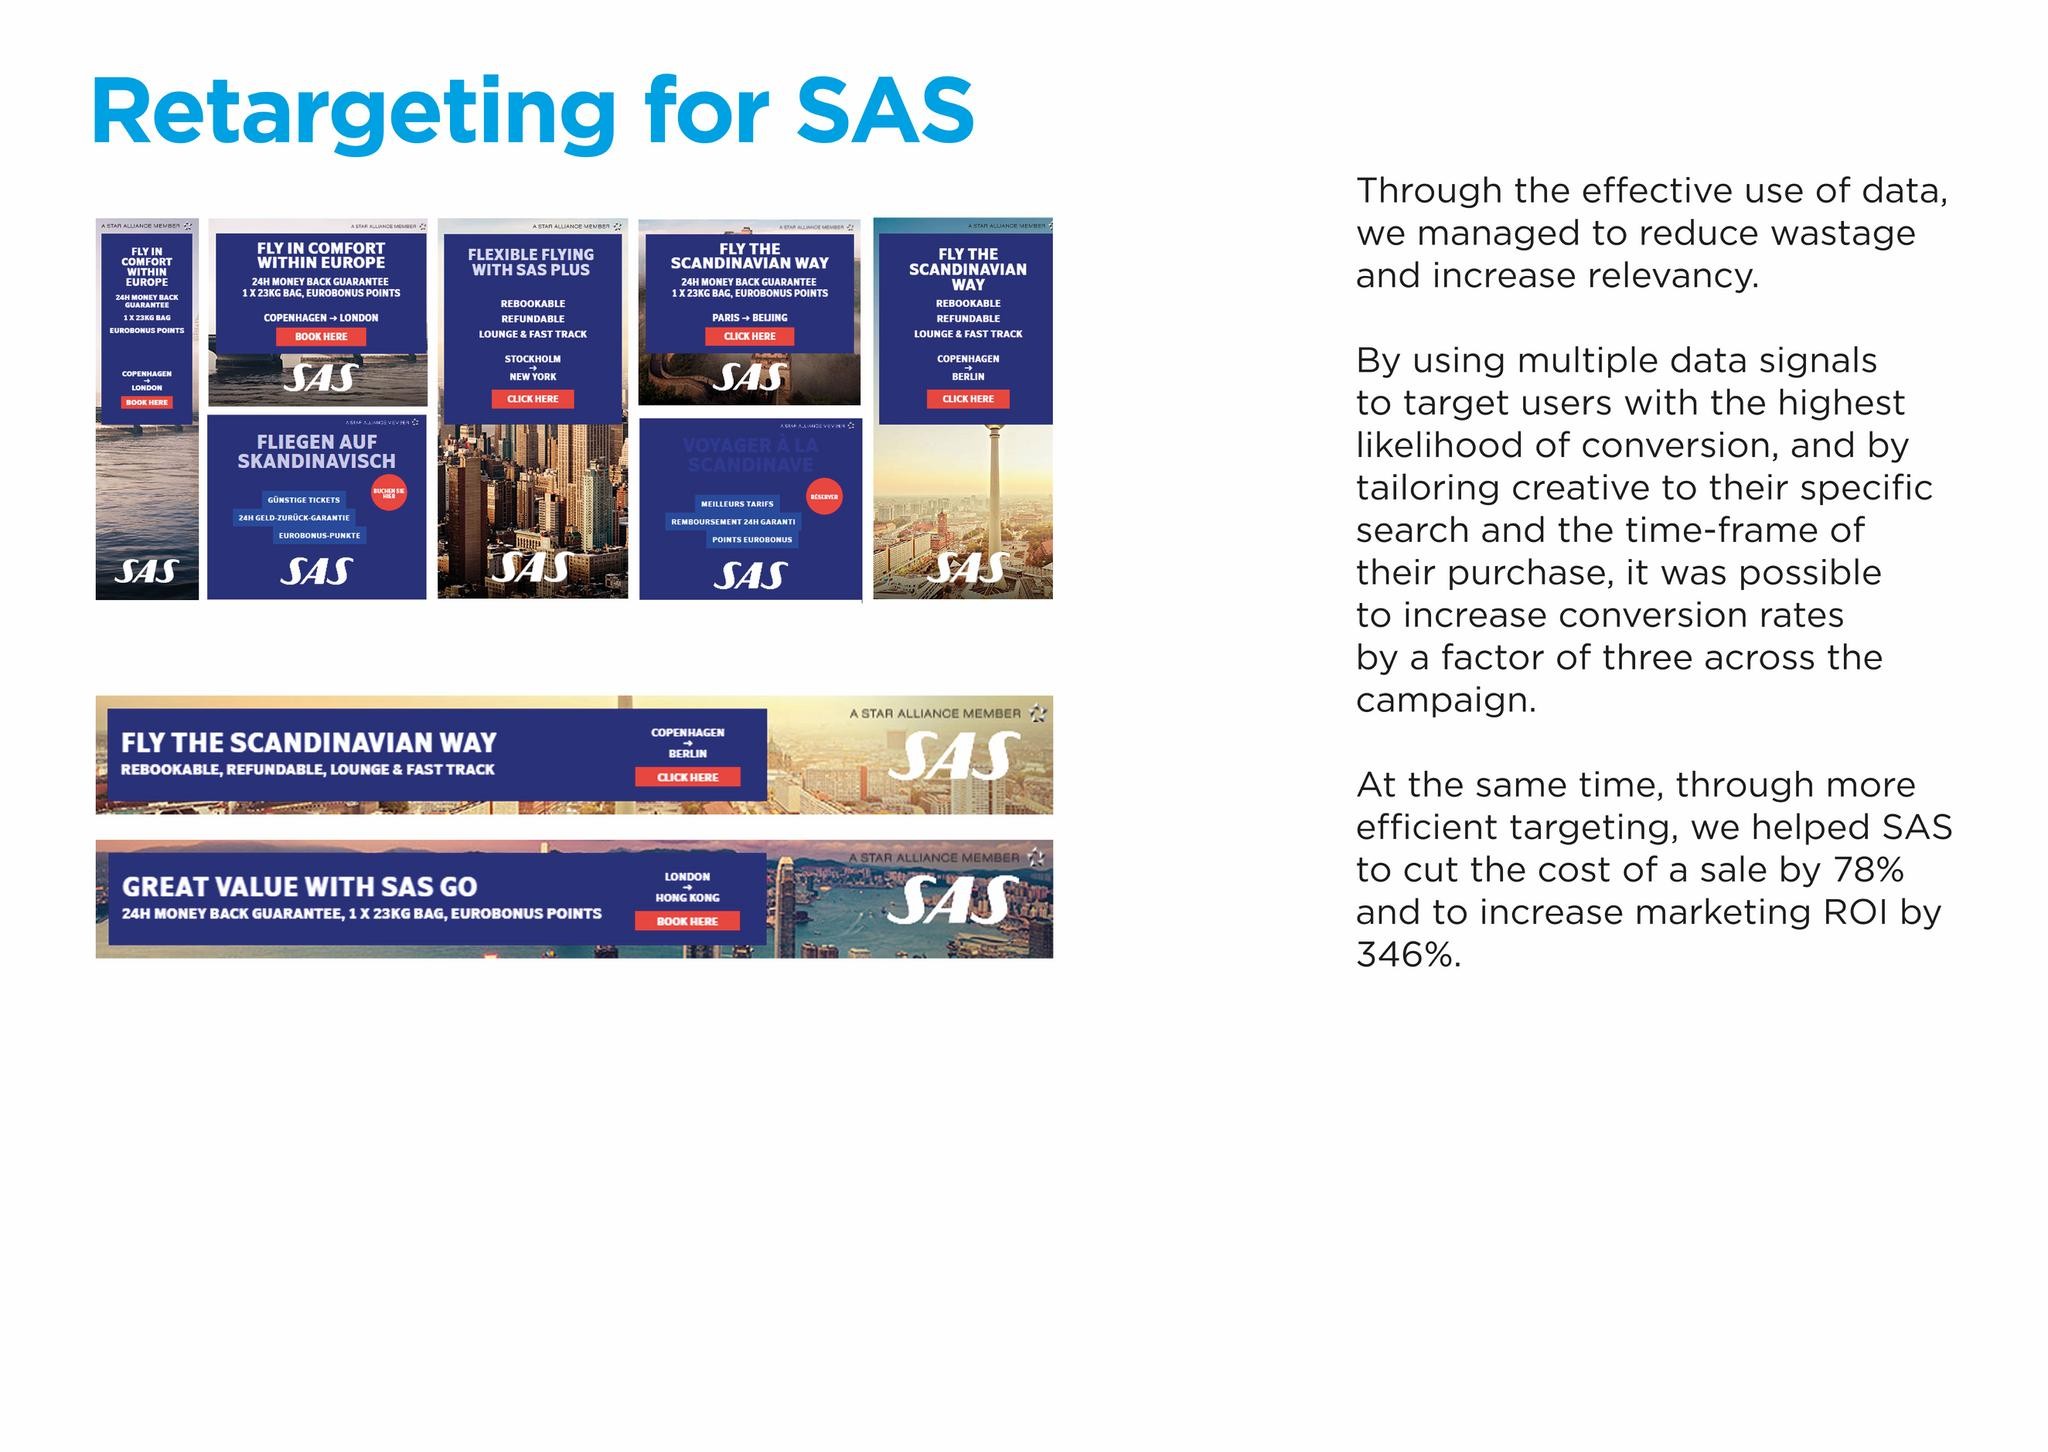 Intelligent, data-led retargeting for Scandinavian Airline Systems (SAS)